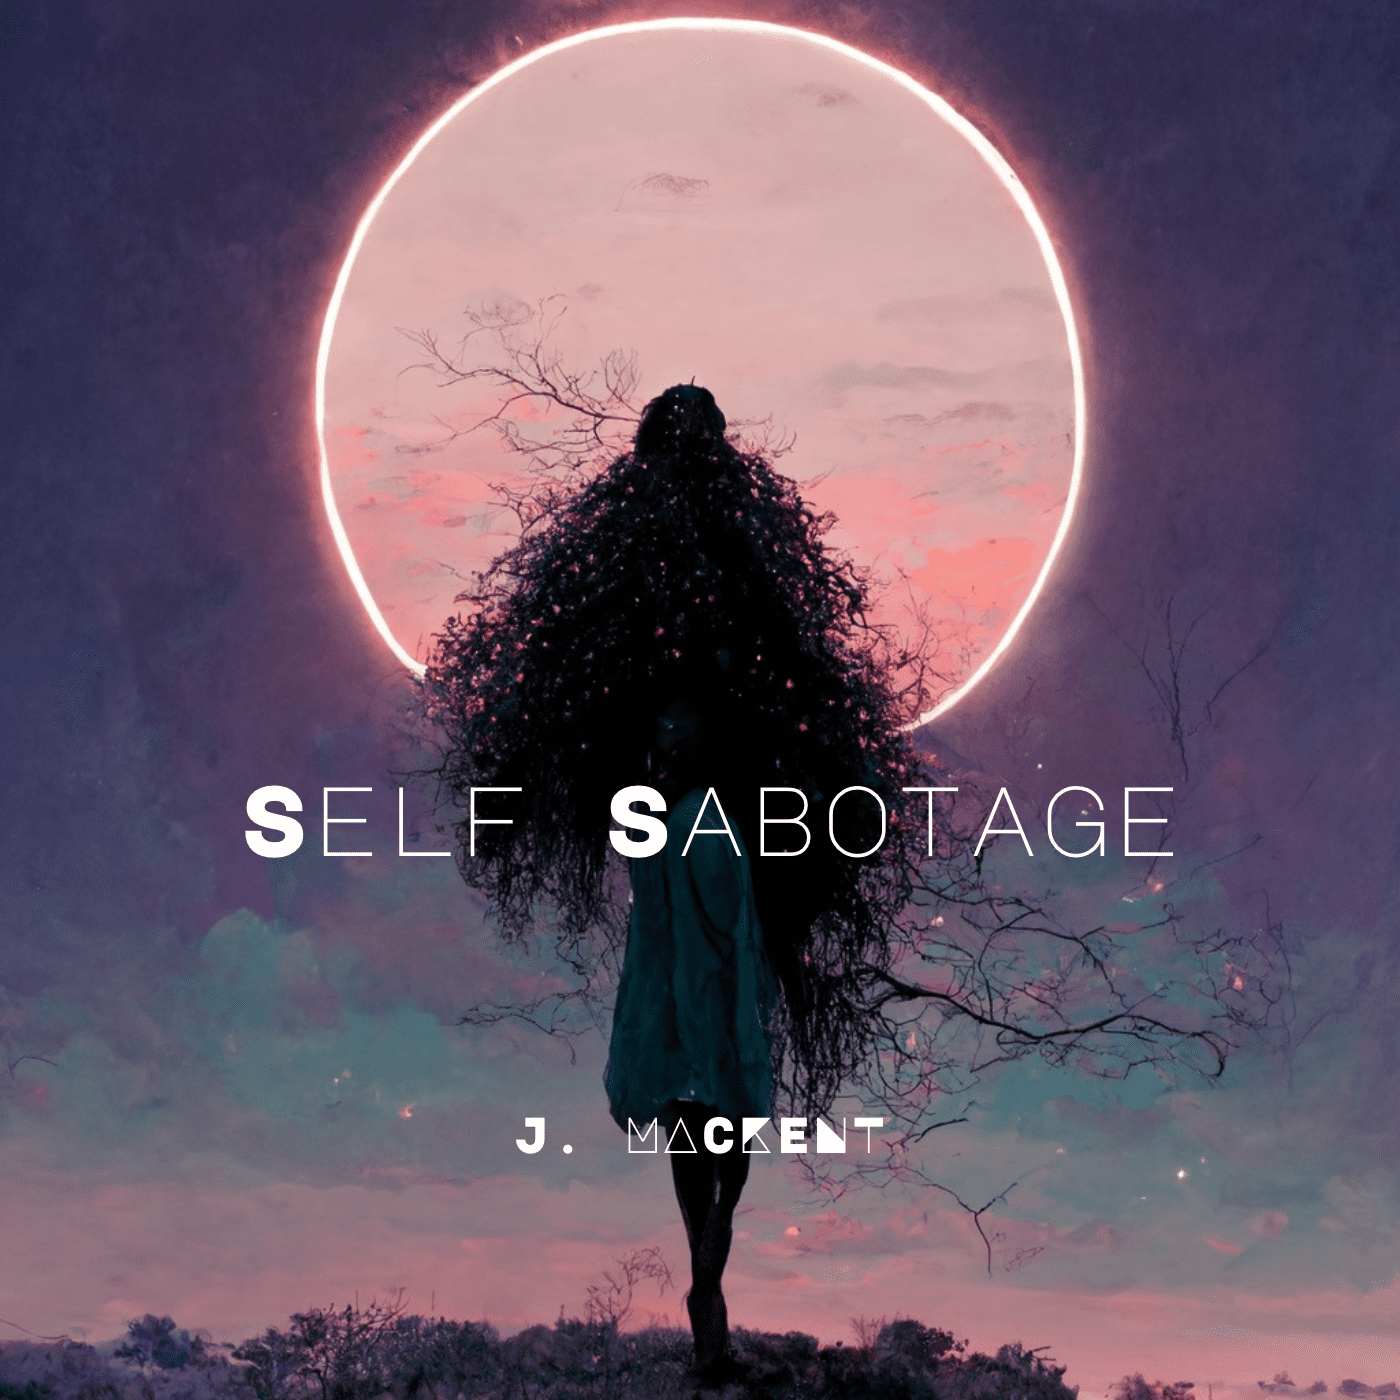 Cover art for J. Mack Ent.'s song: Self Sabotage